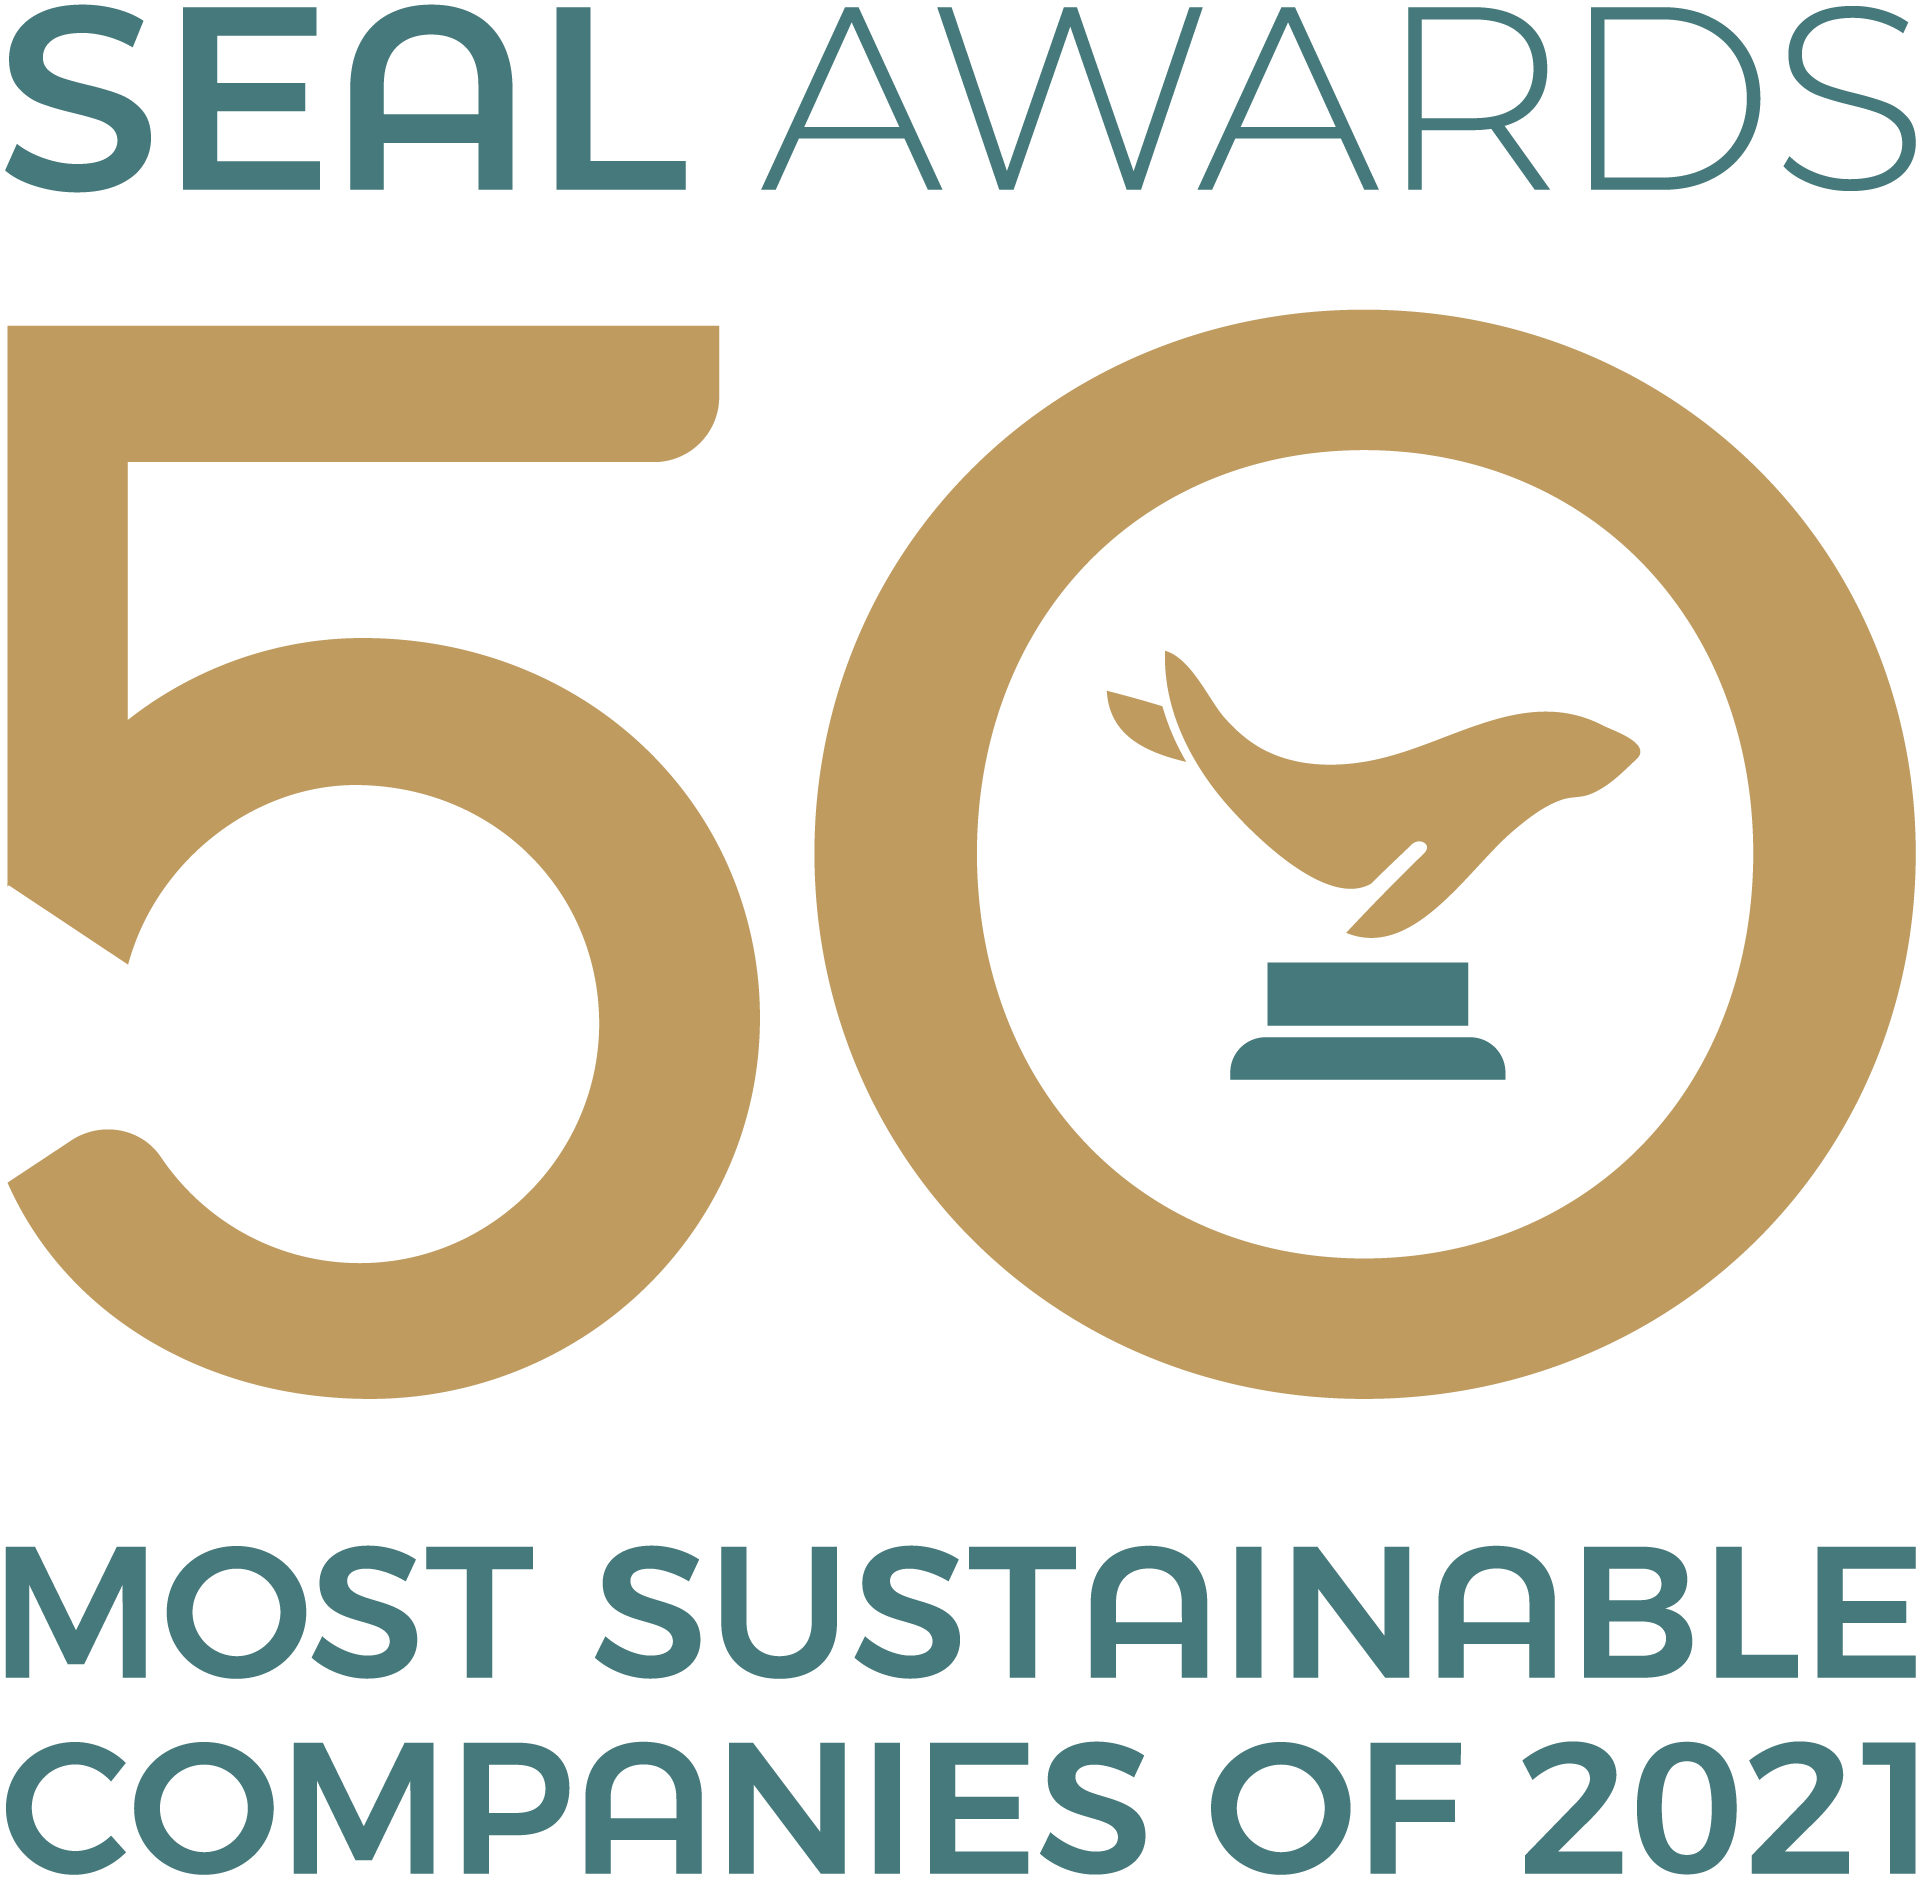 SEAL Award 2021